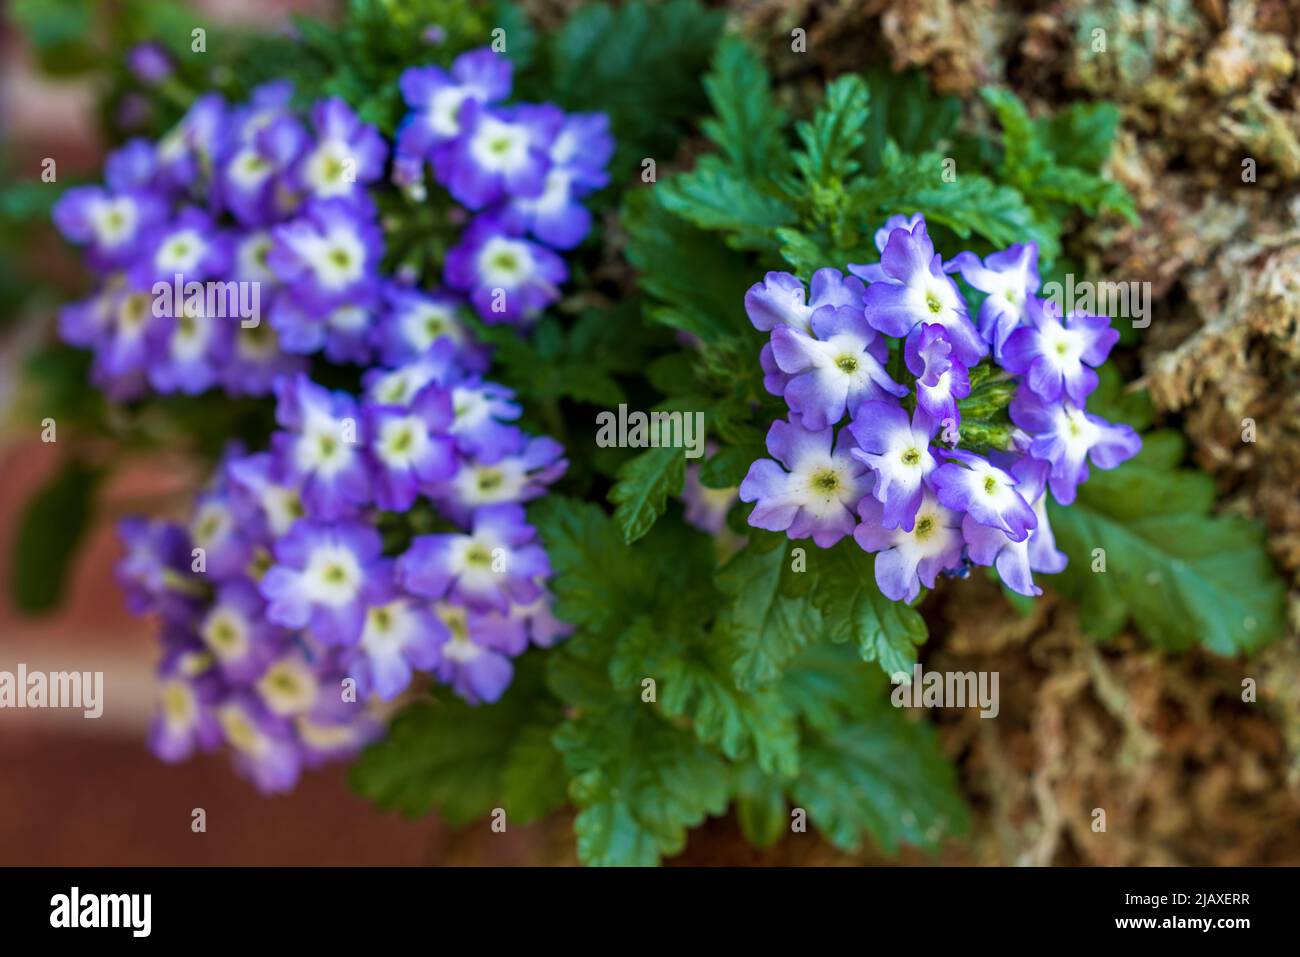 Beautiful purple and white Verbena Stock Photo